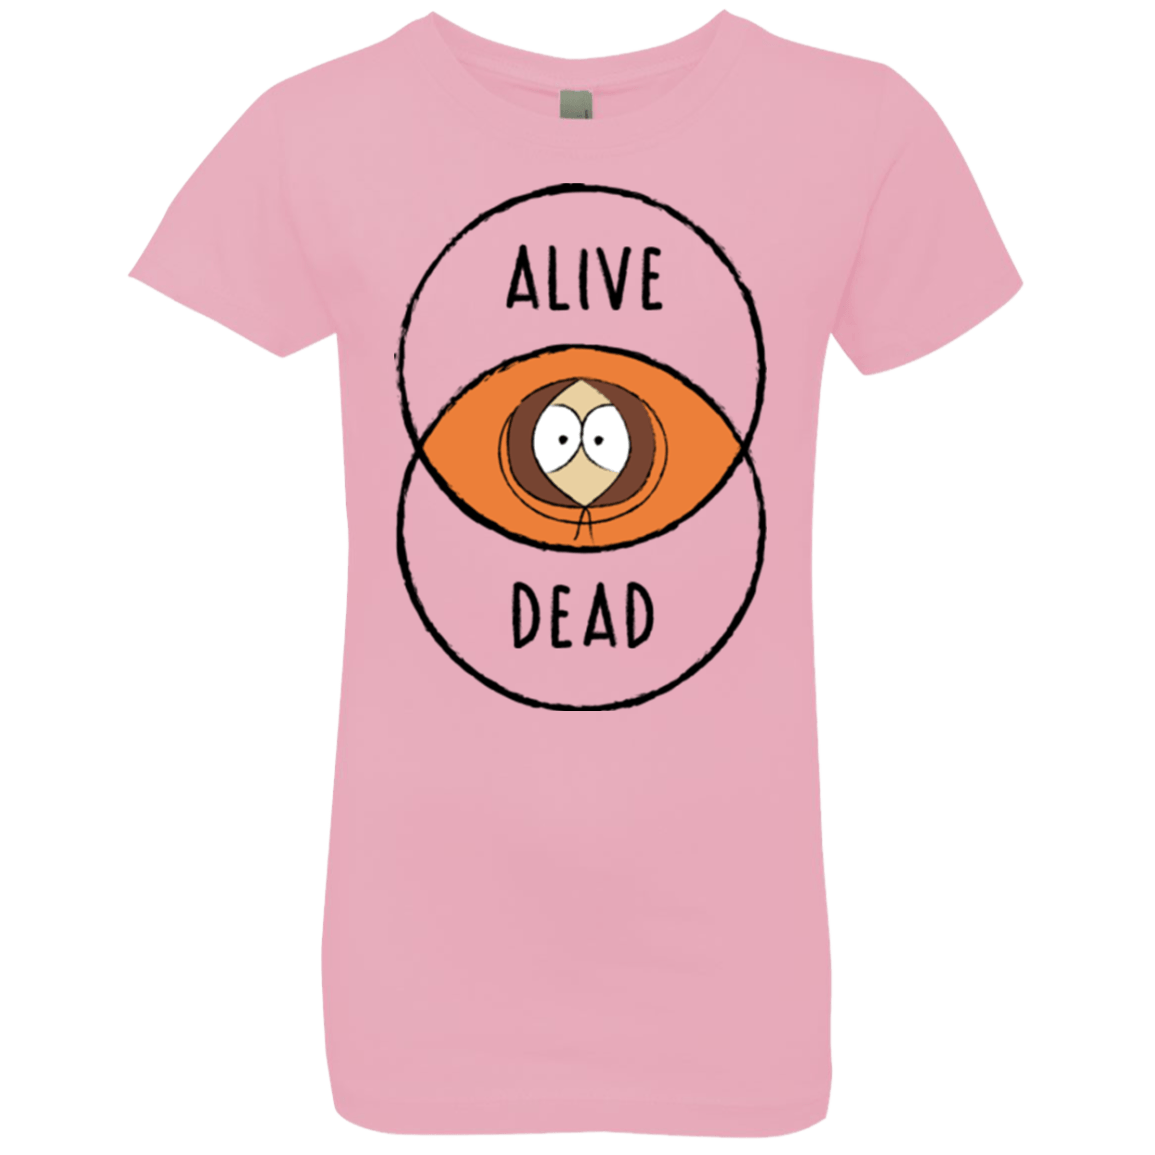 Venny Girls Premium T-Shirt